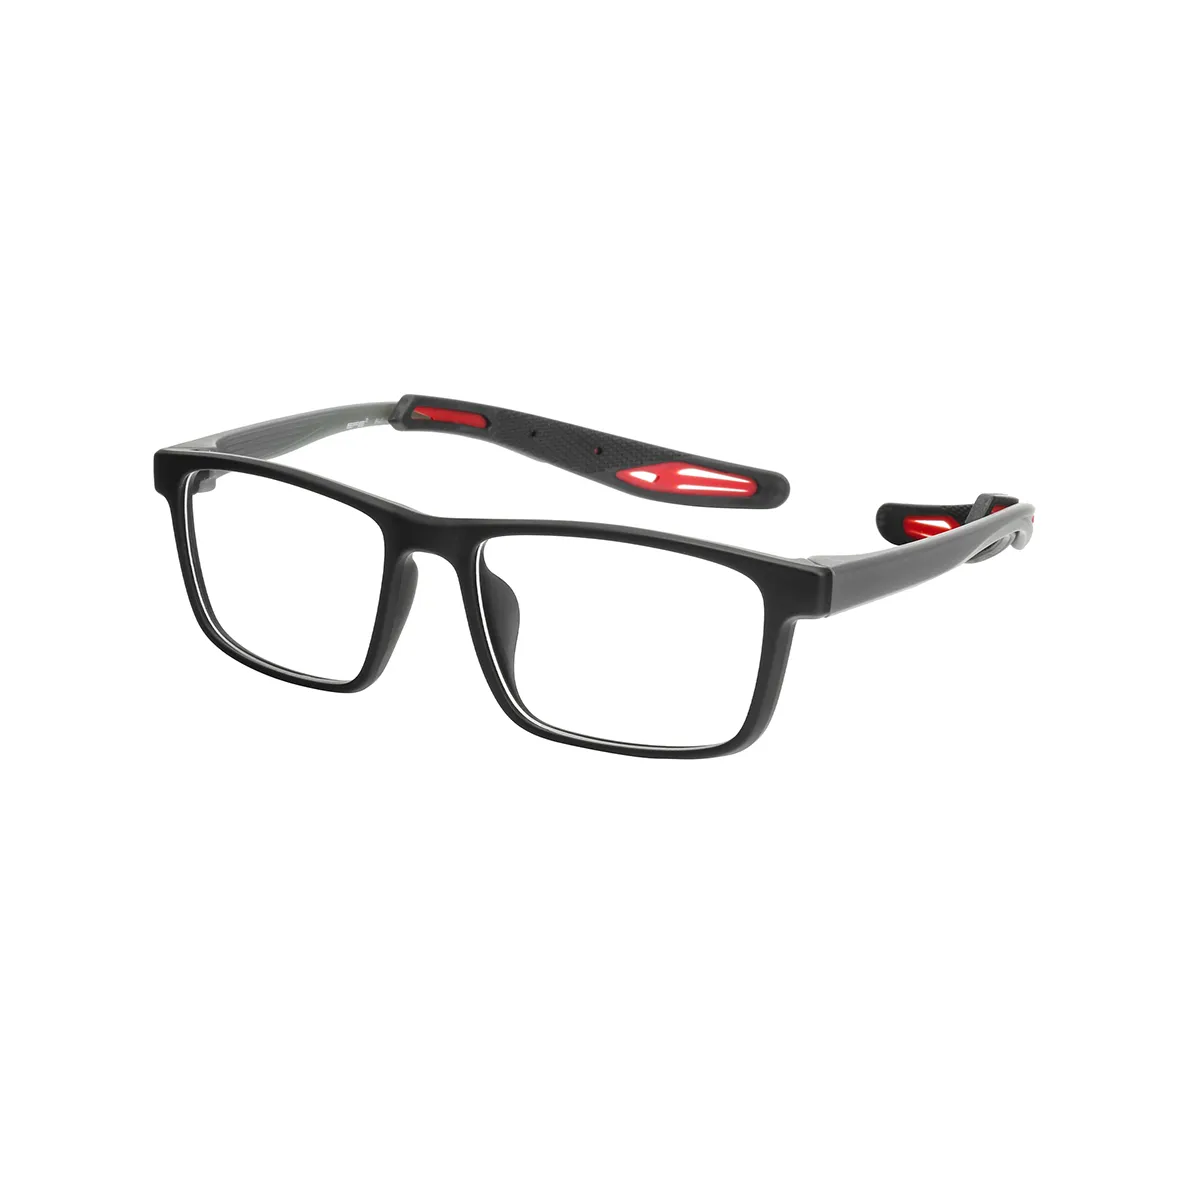 Sports Rectangle Black-Red Glasses for Men